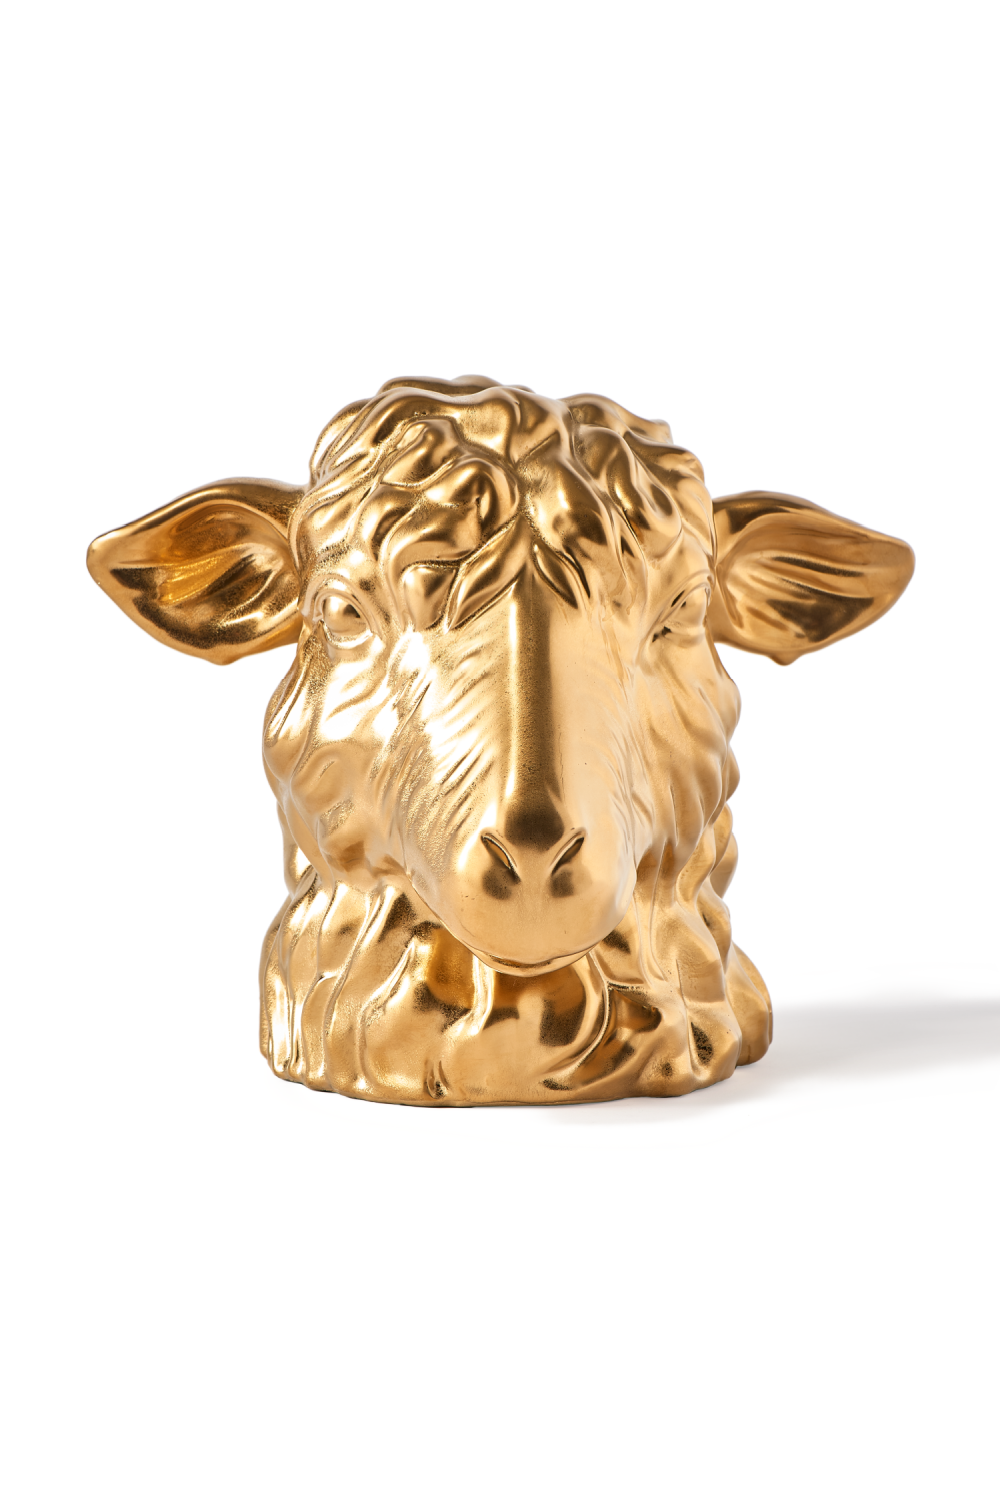 Gold Sheep Head Moneybox | Pols Potten Don't Eat Me, Save Me | Oroa.com